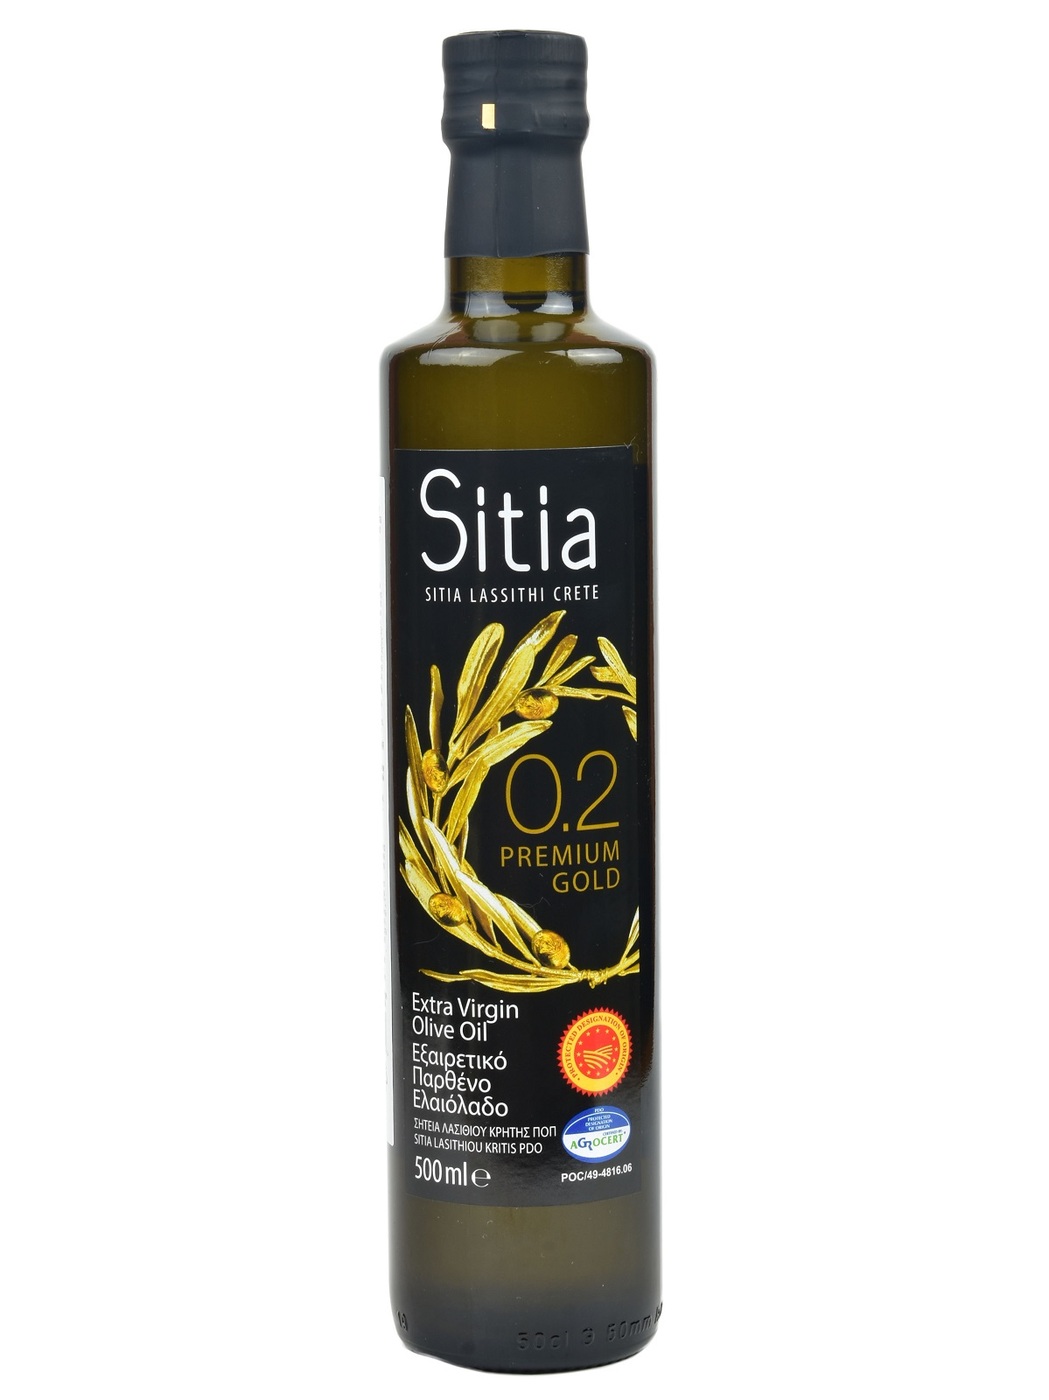 Оливковое масло 0.5. Масло оливковое Sitia Extra Virgin. Оливковое масло Экстра Вирджин олив Ойл. Оливковое масло Сития 0.2. Масло оливковое Sitia 0.2.